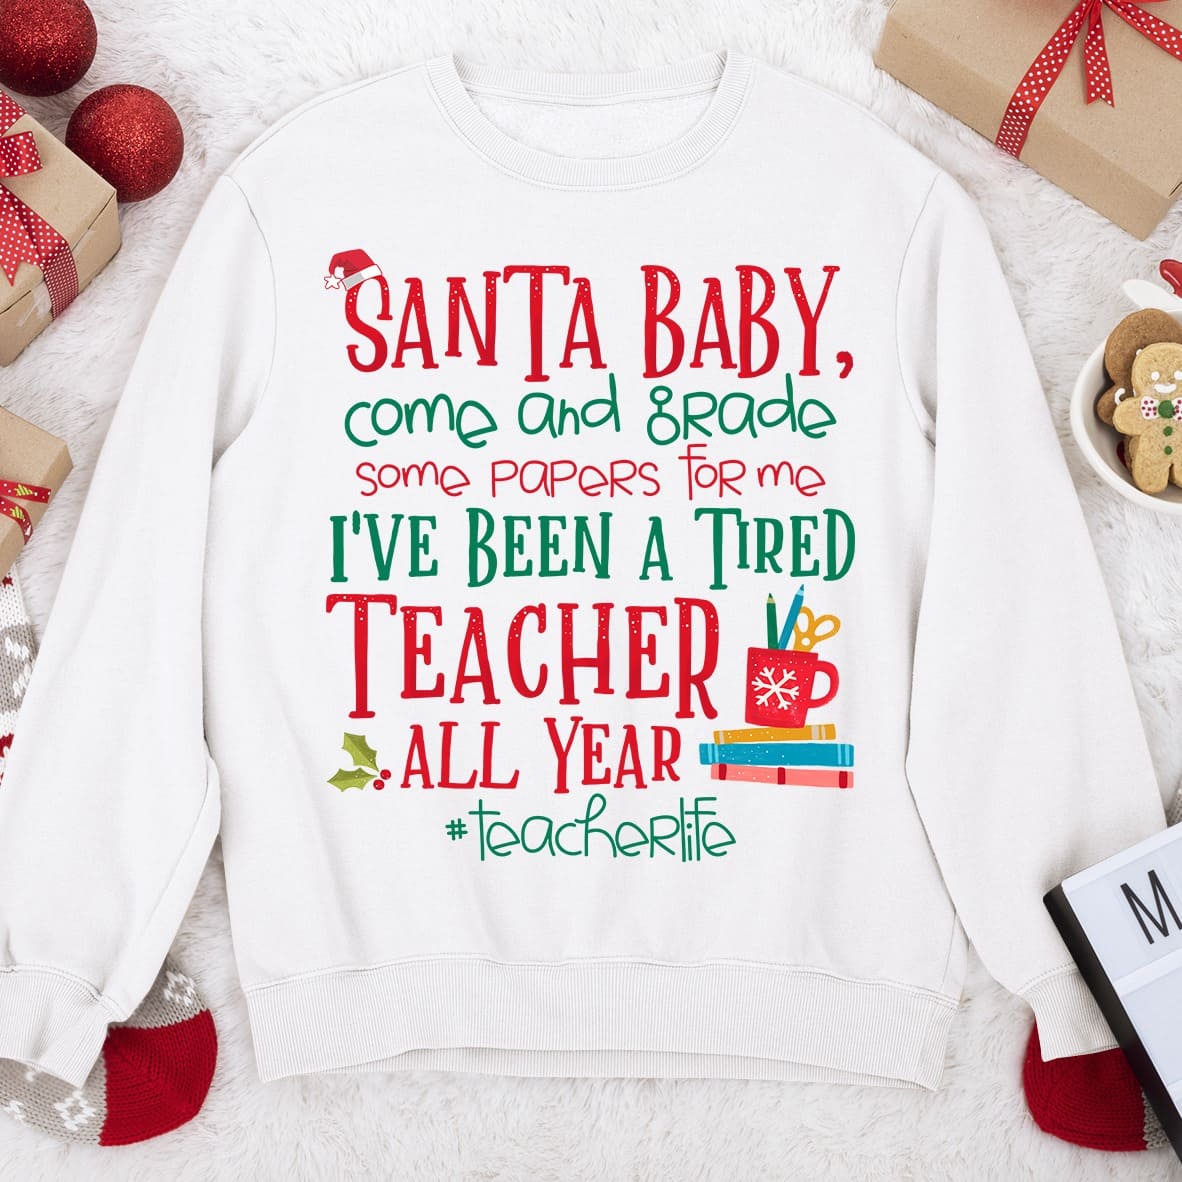 Santa baby, come and grade - Tired teacher all year, teacher life